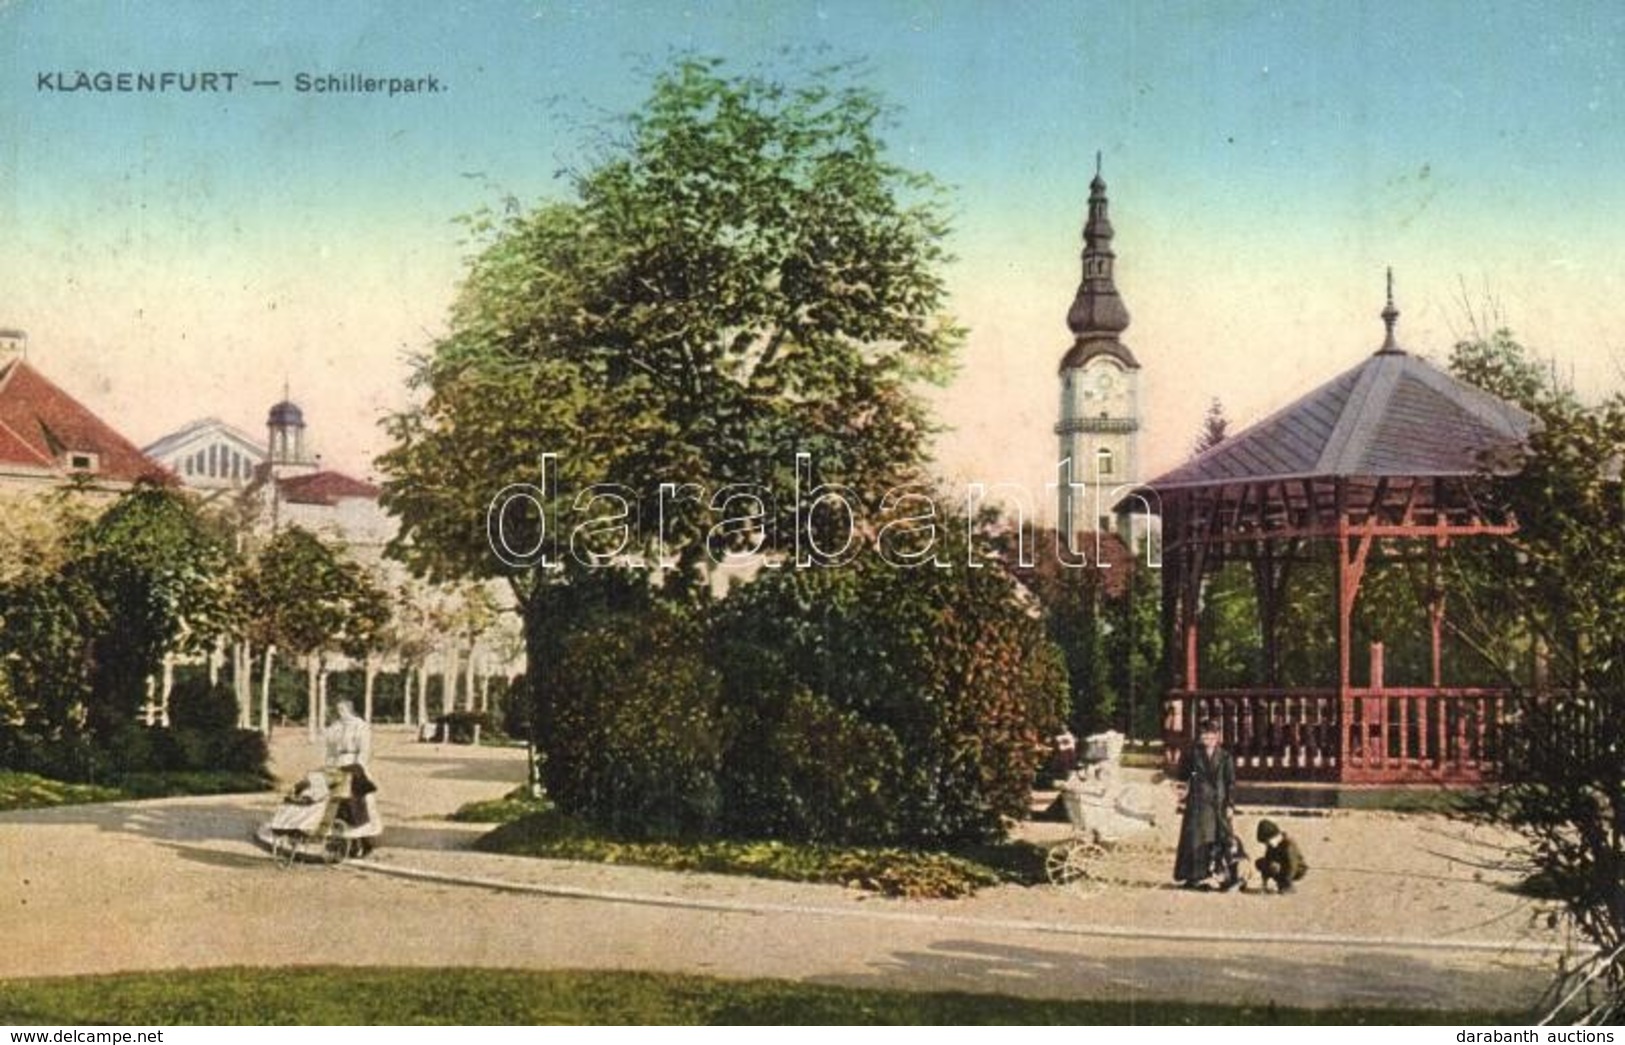 ** 7 Db Regi Europai Varoskepes Lap / 7 Pre-1945 European Town-view Postcards (Koeln A. Rhein, Muerzzuschlag, Klagenfurt - Zonder Classificatie